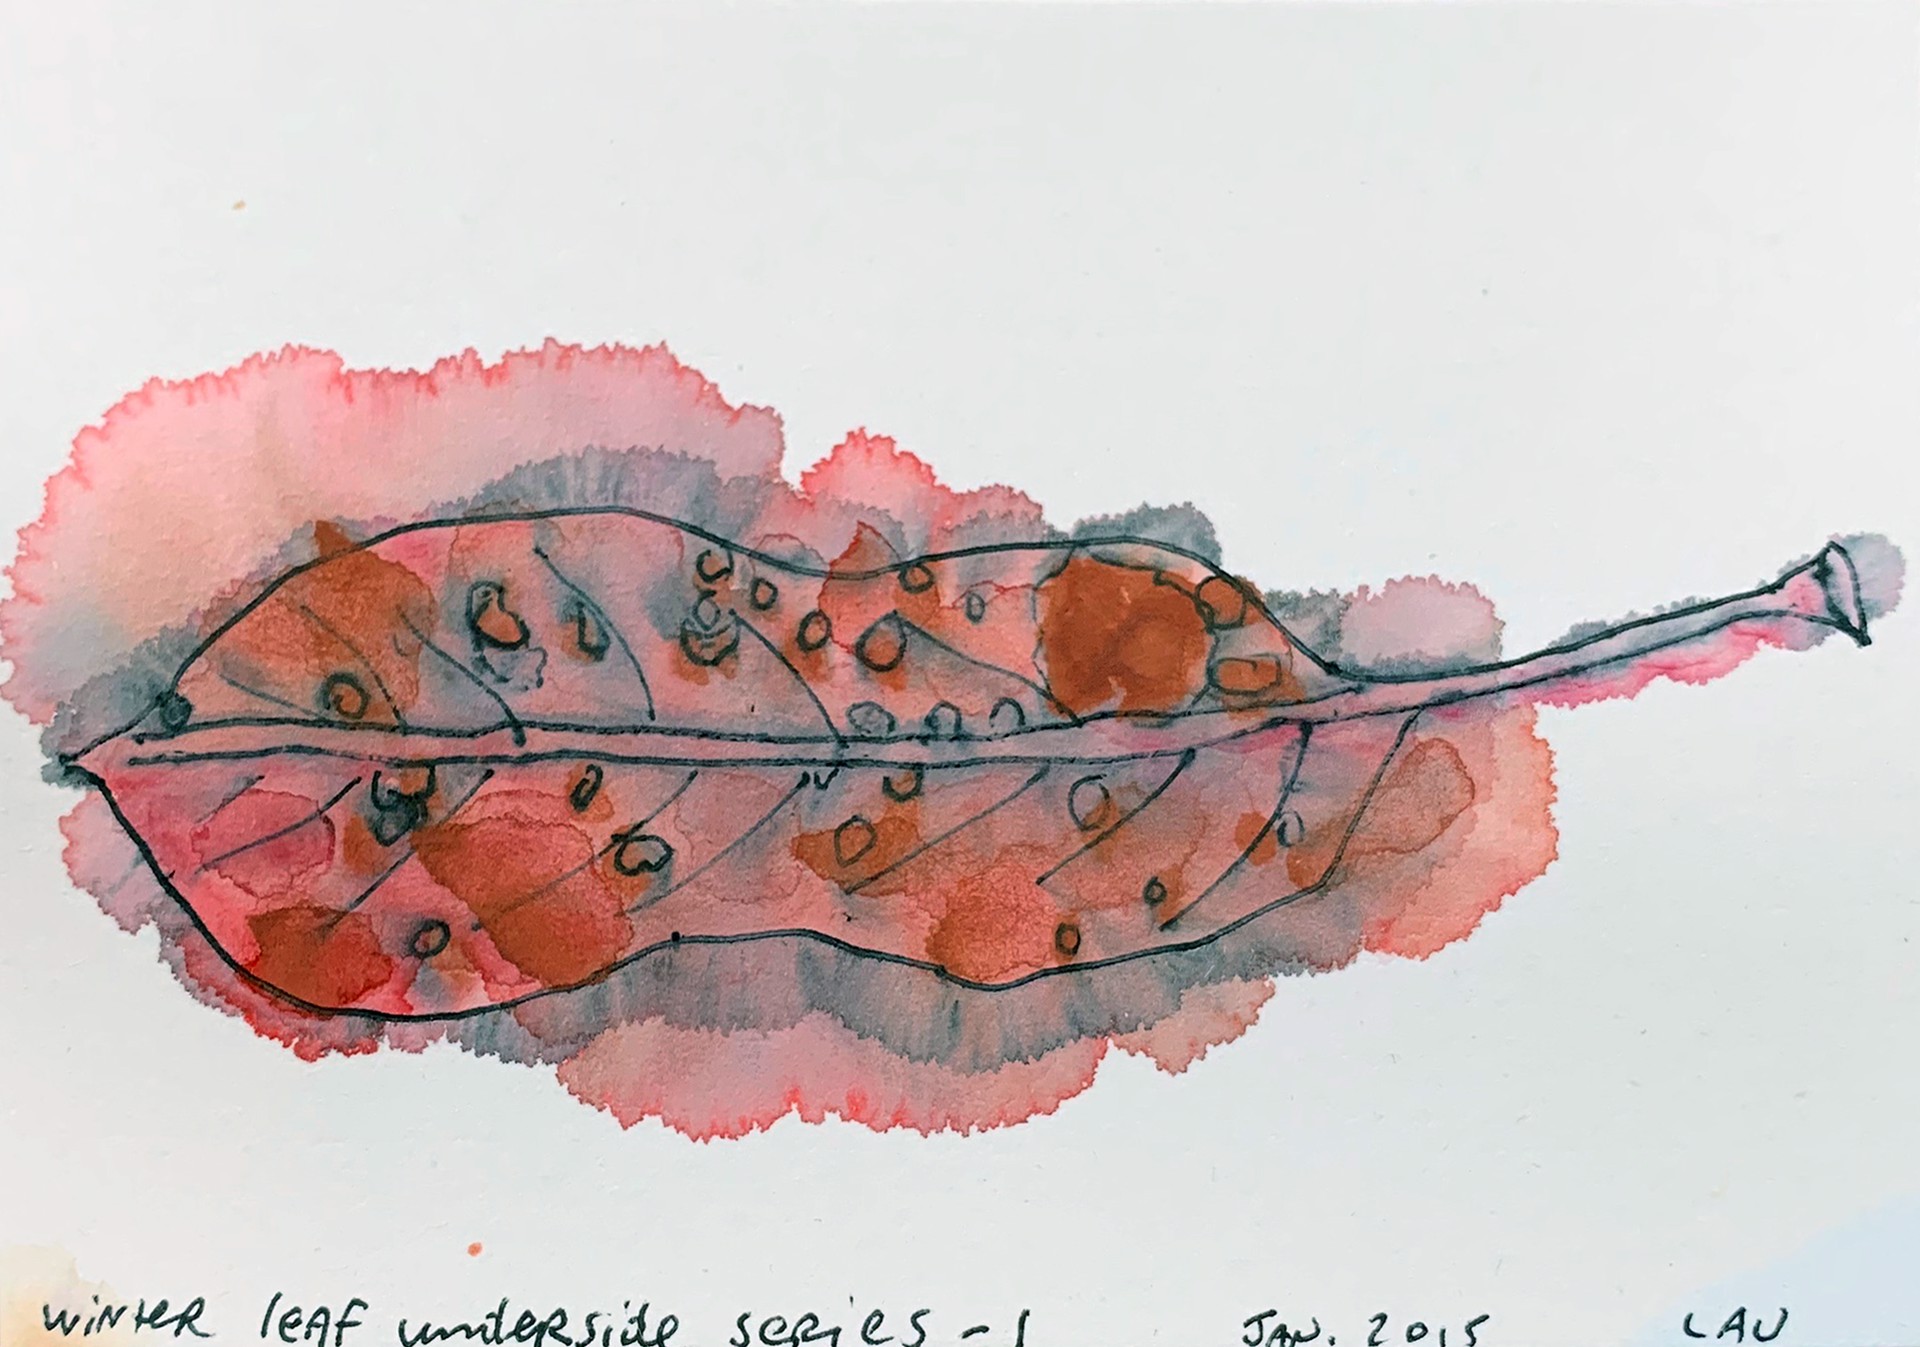 Winter Leaf Underside series 1 by Alan Lau | Small Works